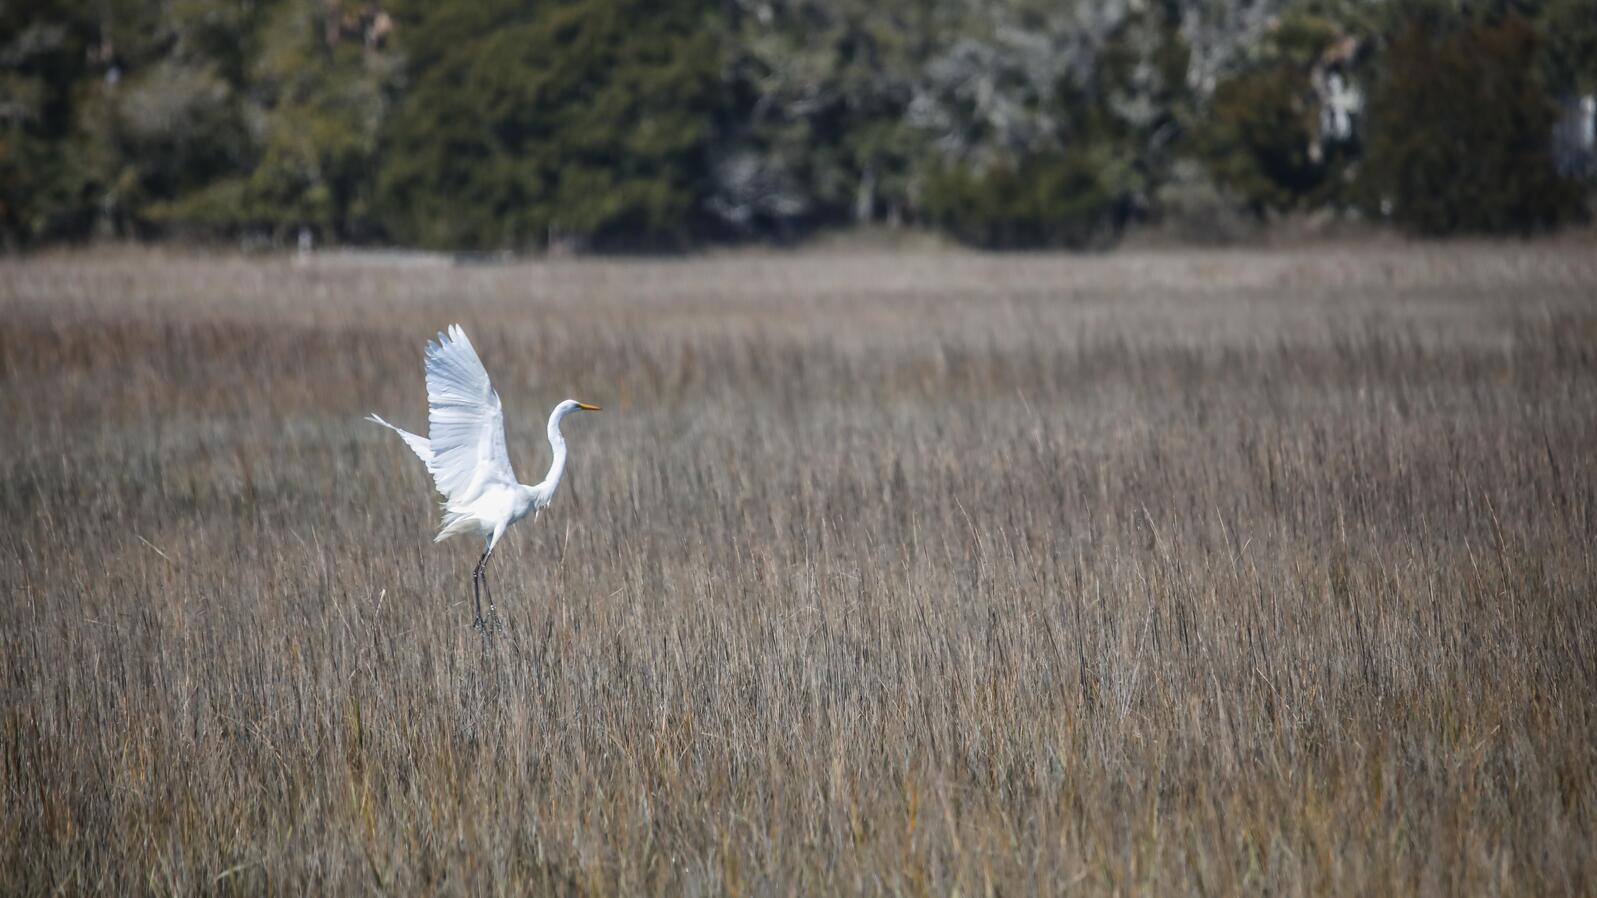 An egret takes flight in the marsh.